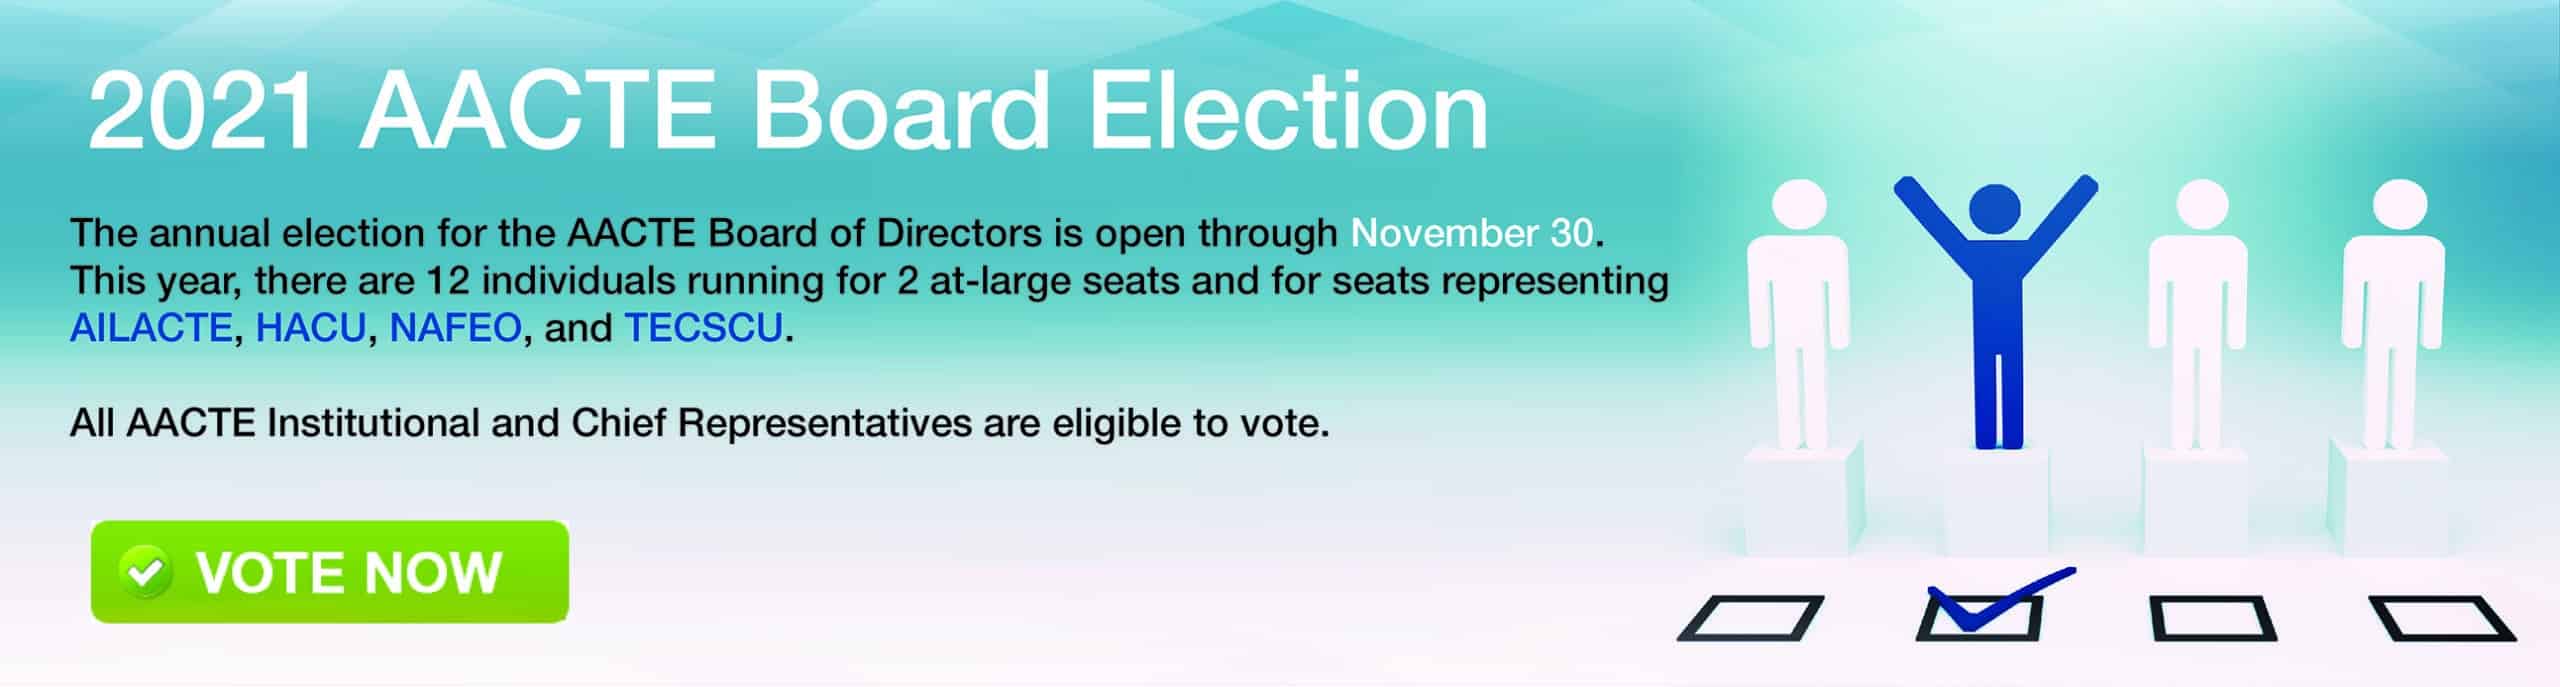 AACTE Board Election